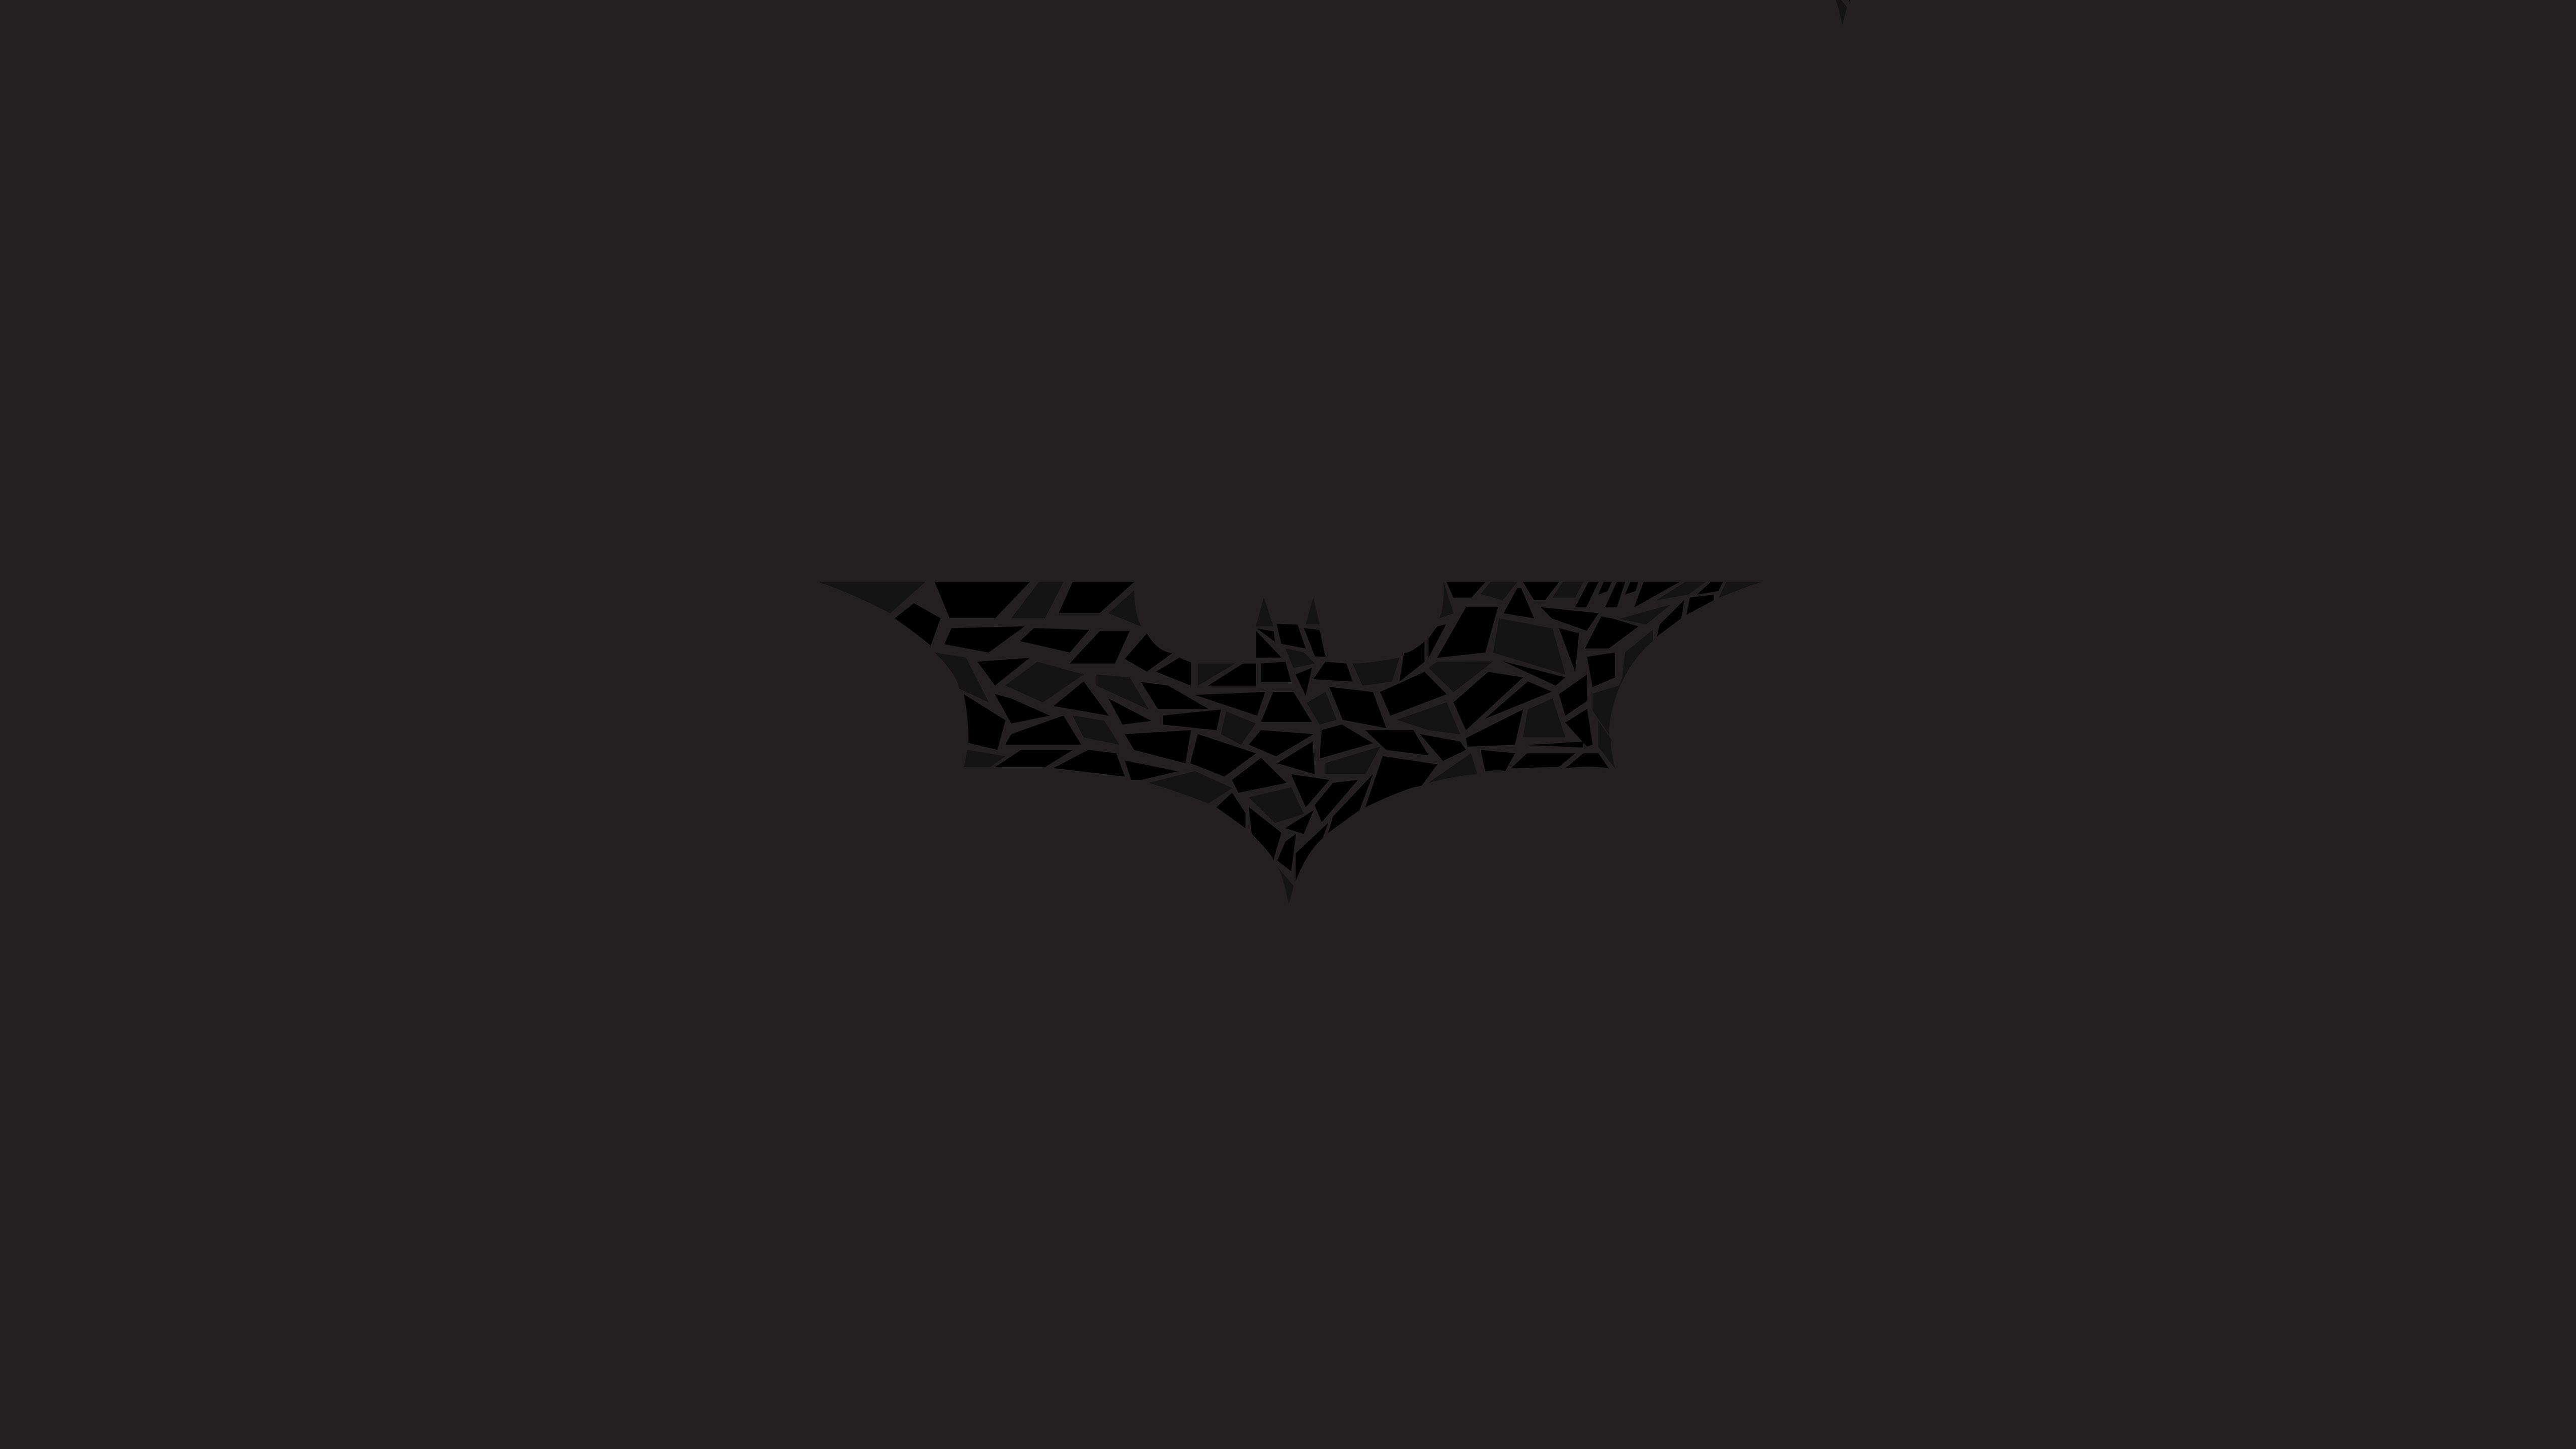 Batman Logo Artwork, HD Superheroes, 4k Wallpapers, Images, Backgrounds ...